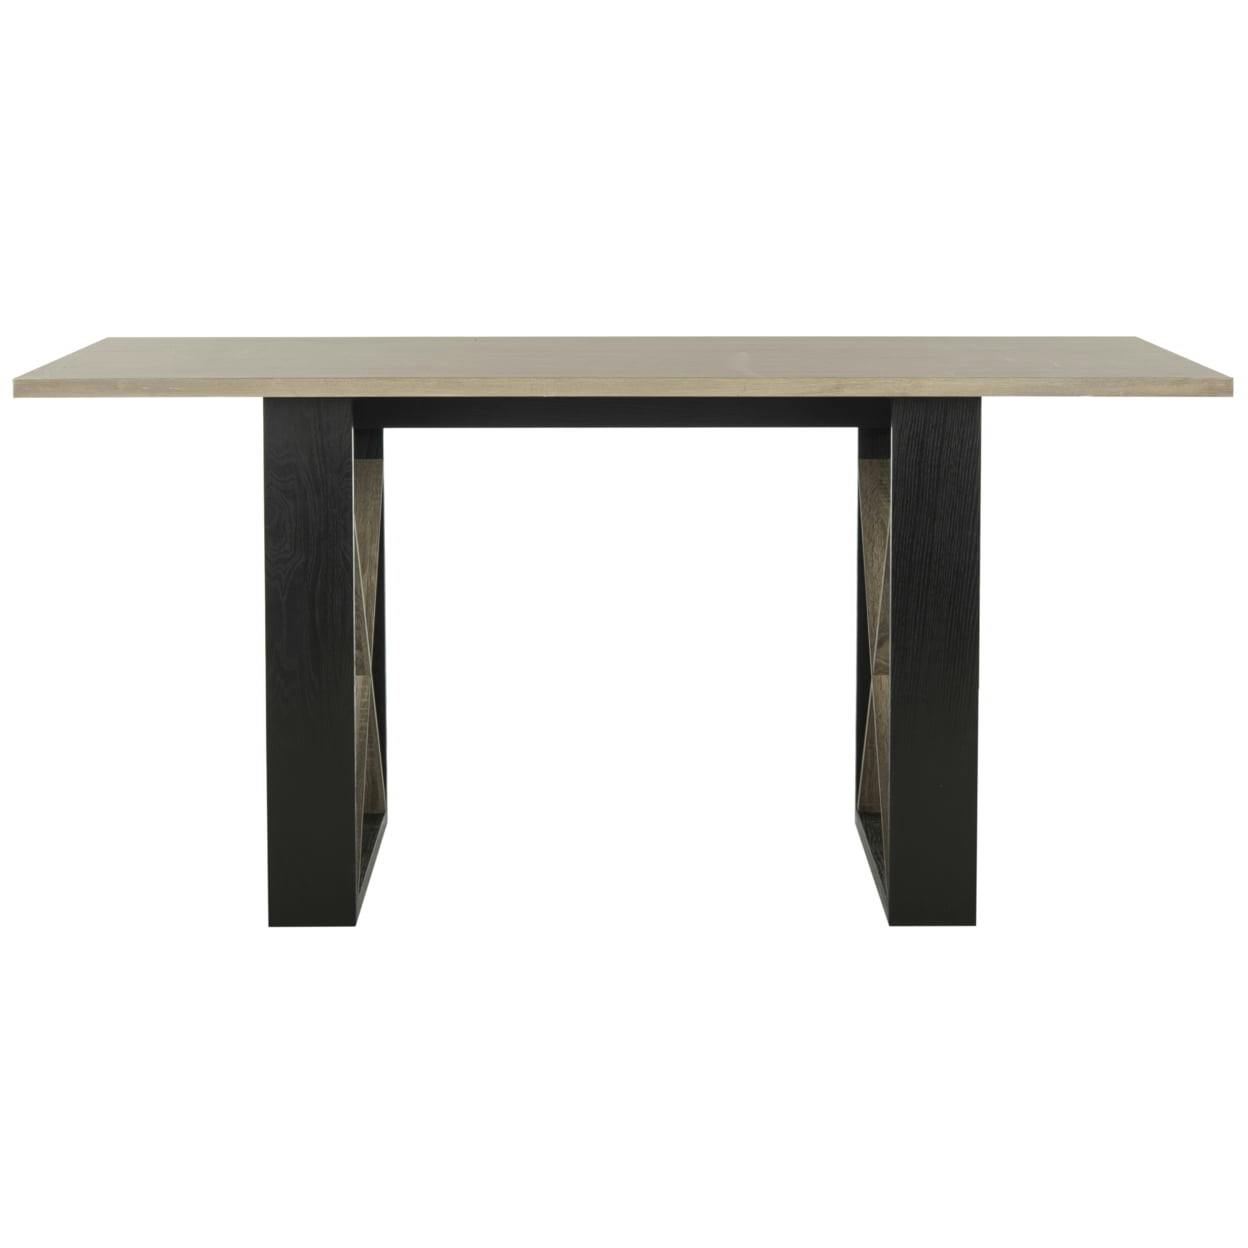 Park Avenue Inspired Light Grey Rectangular Wood Dining Table